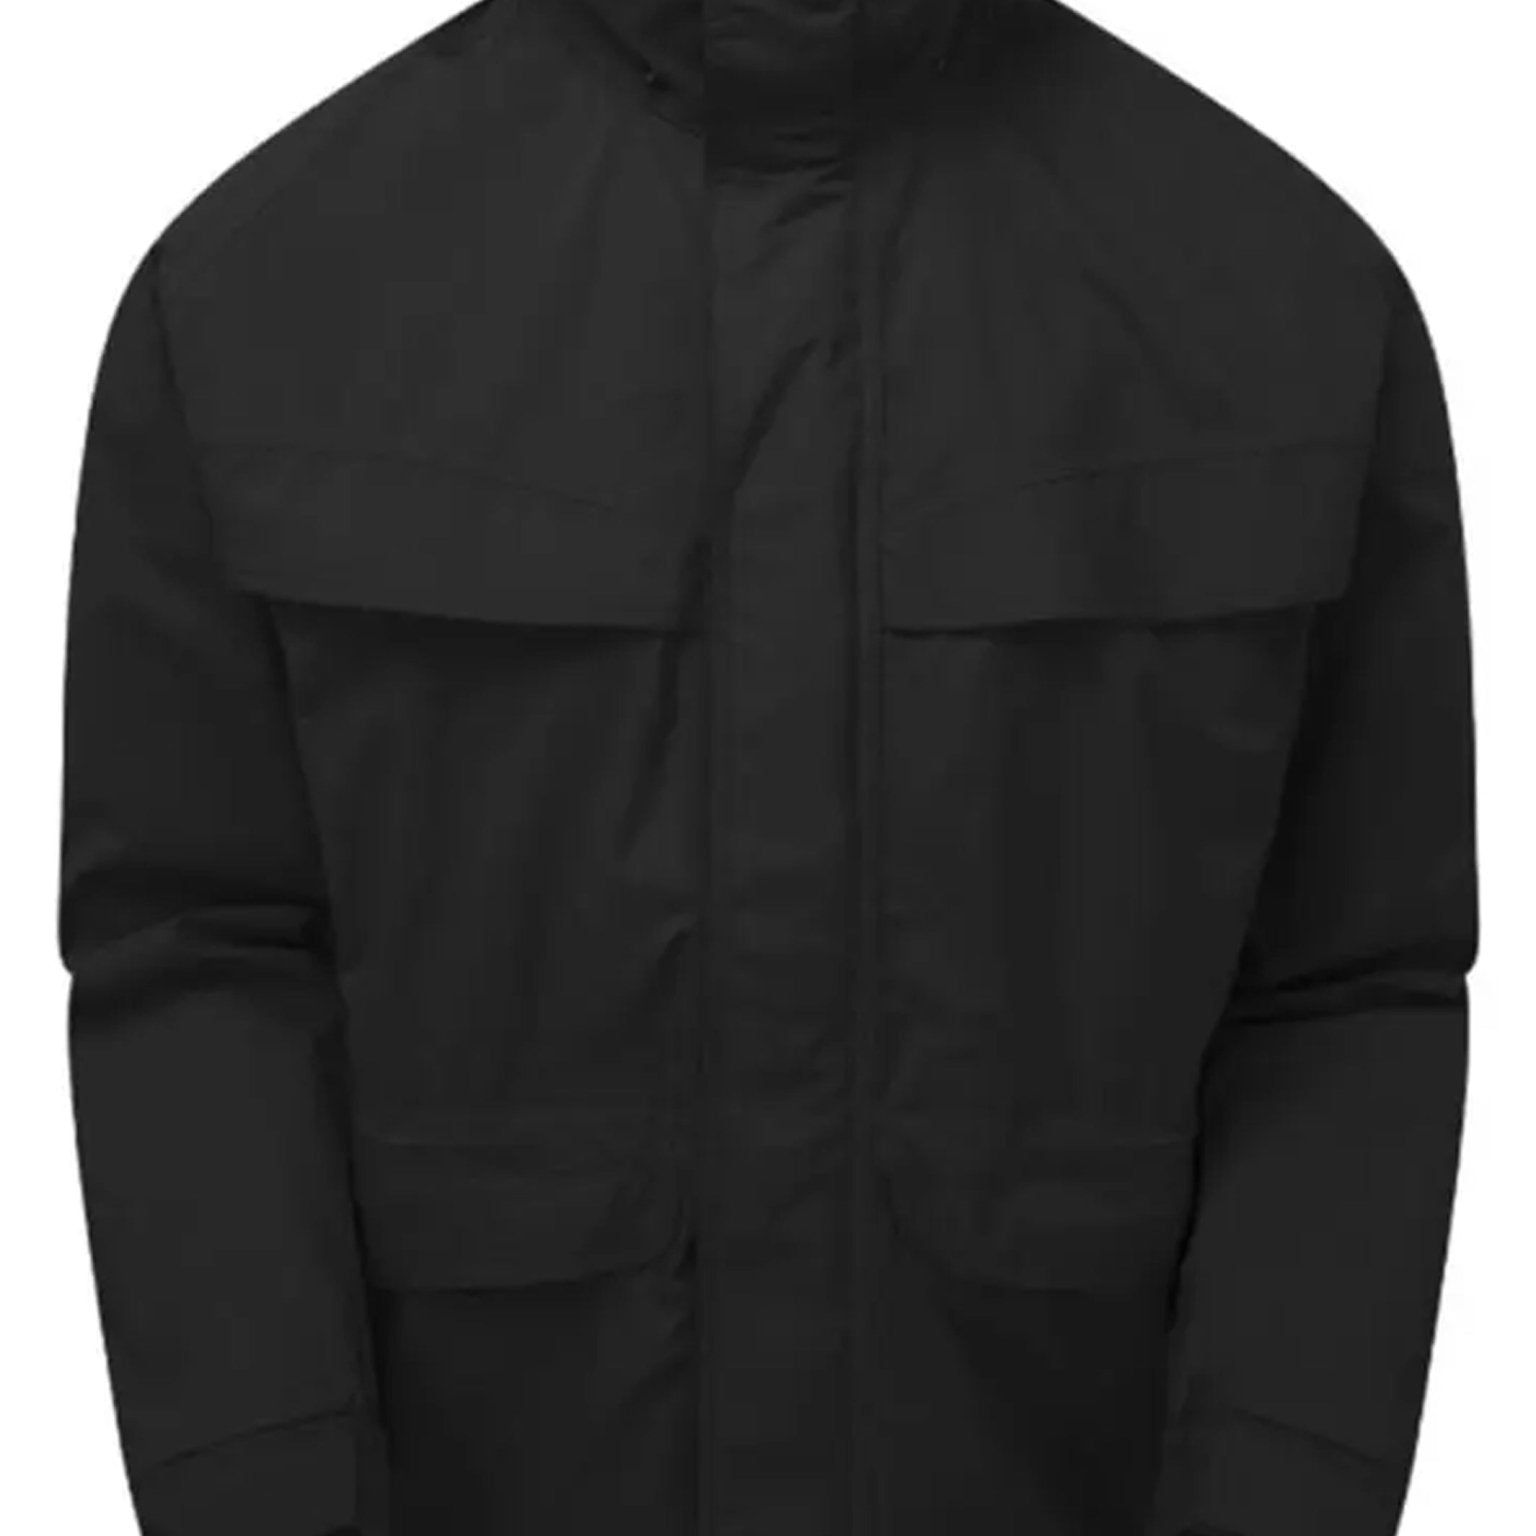 4elementsclothingKeelaKeela Outdoors - Keela Kintyre Mens Waterproof & Windproof, Breathable Jacket / coat with hoodOuterwear00610-100000-0-111